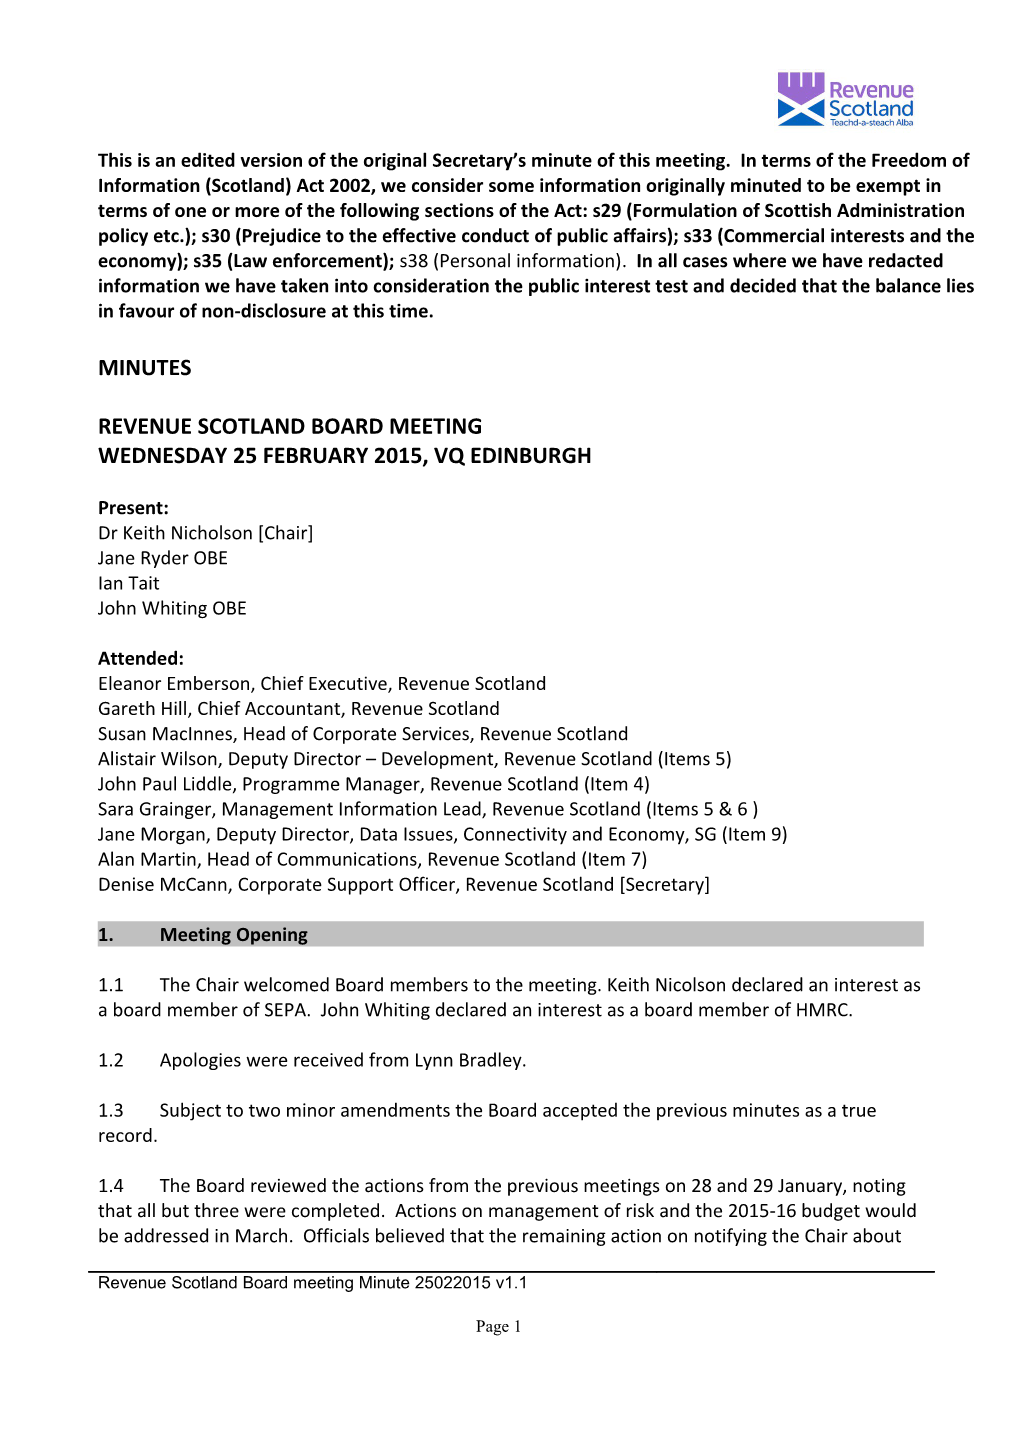 Revenue Scotland Board Meeting